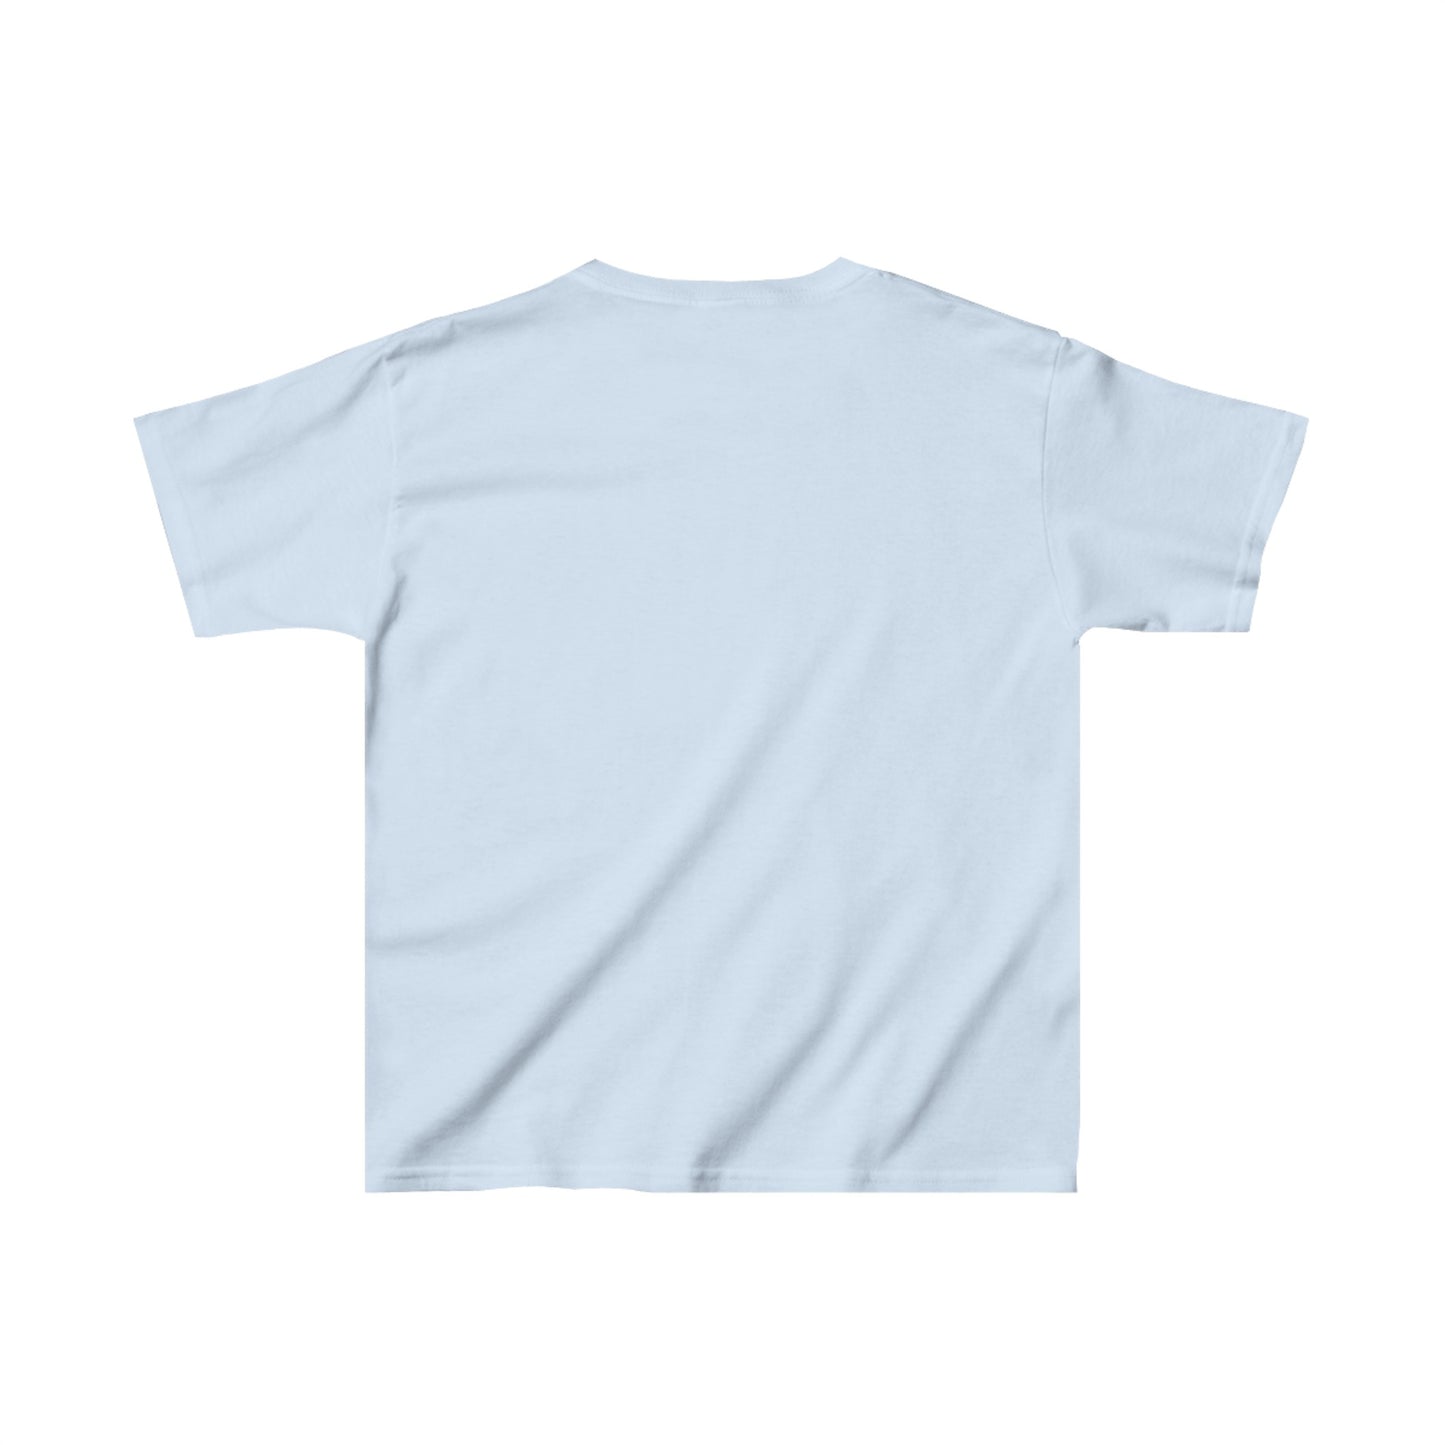 T-Shirt - KIDS | VBS | Set Sail 2